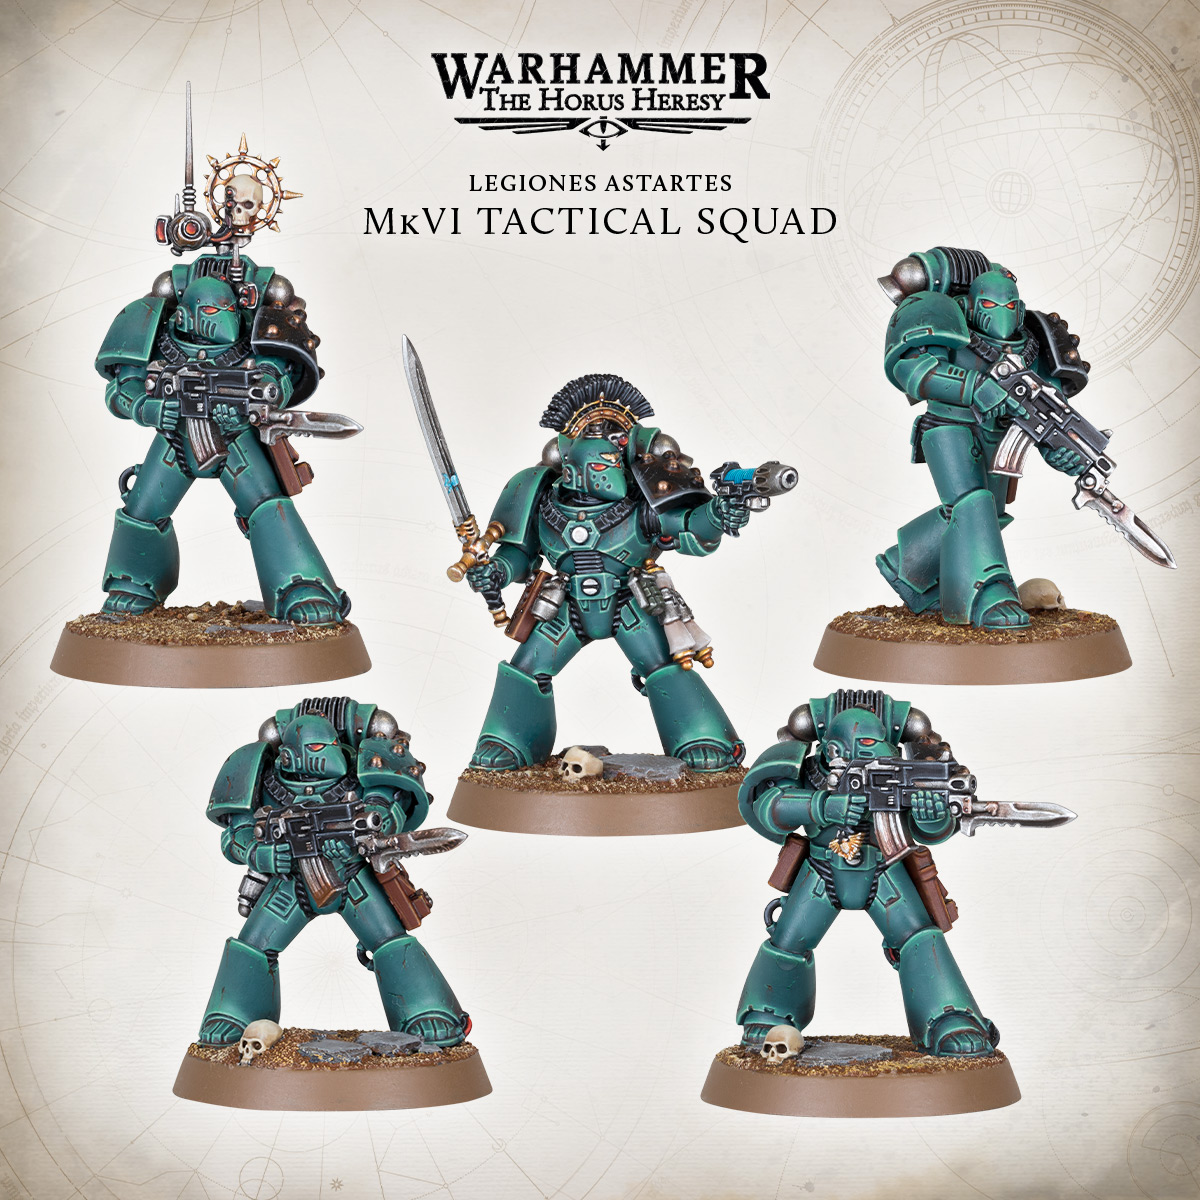 MKVI Tactical Squad #1 - Warhammer The Horus Heresy